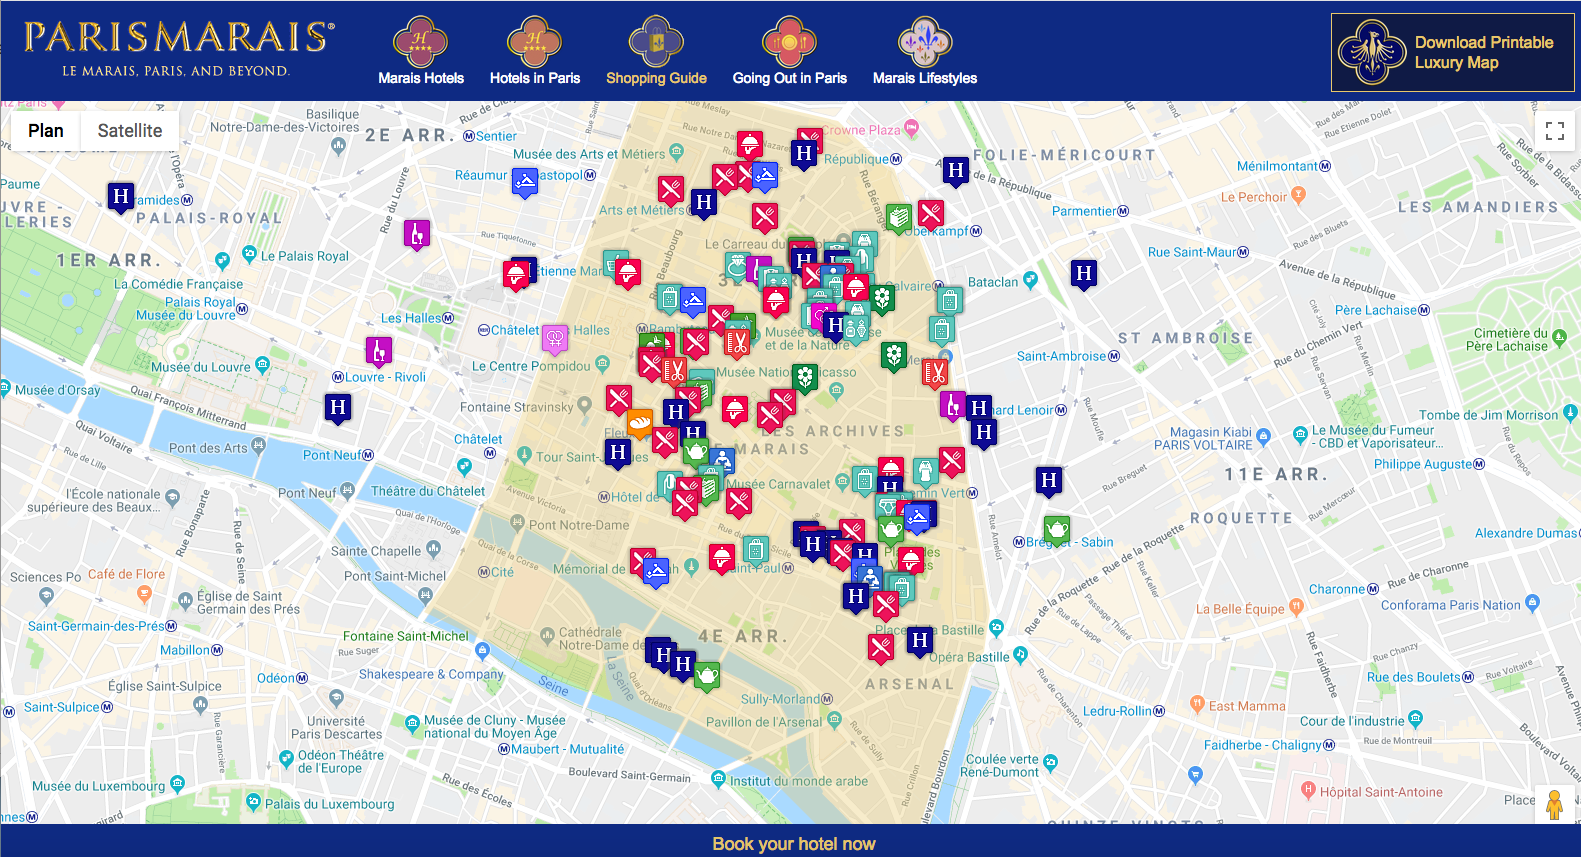 PARIS MARAIS INTERACTIVE MAP